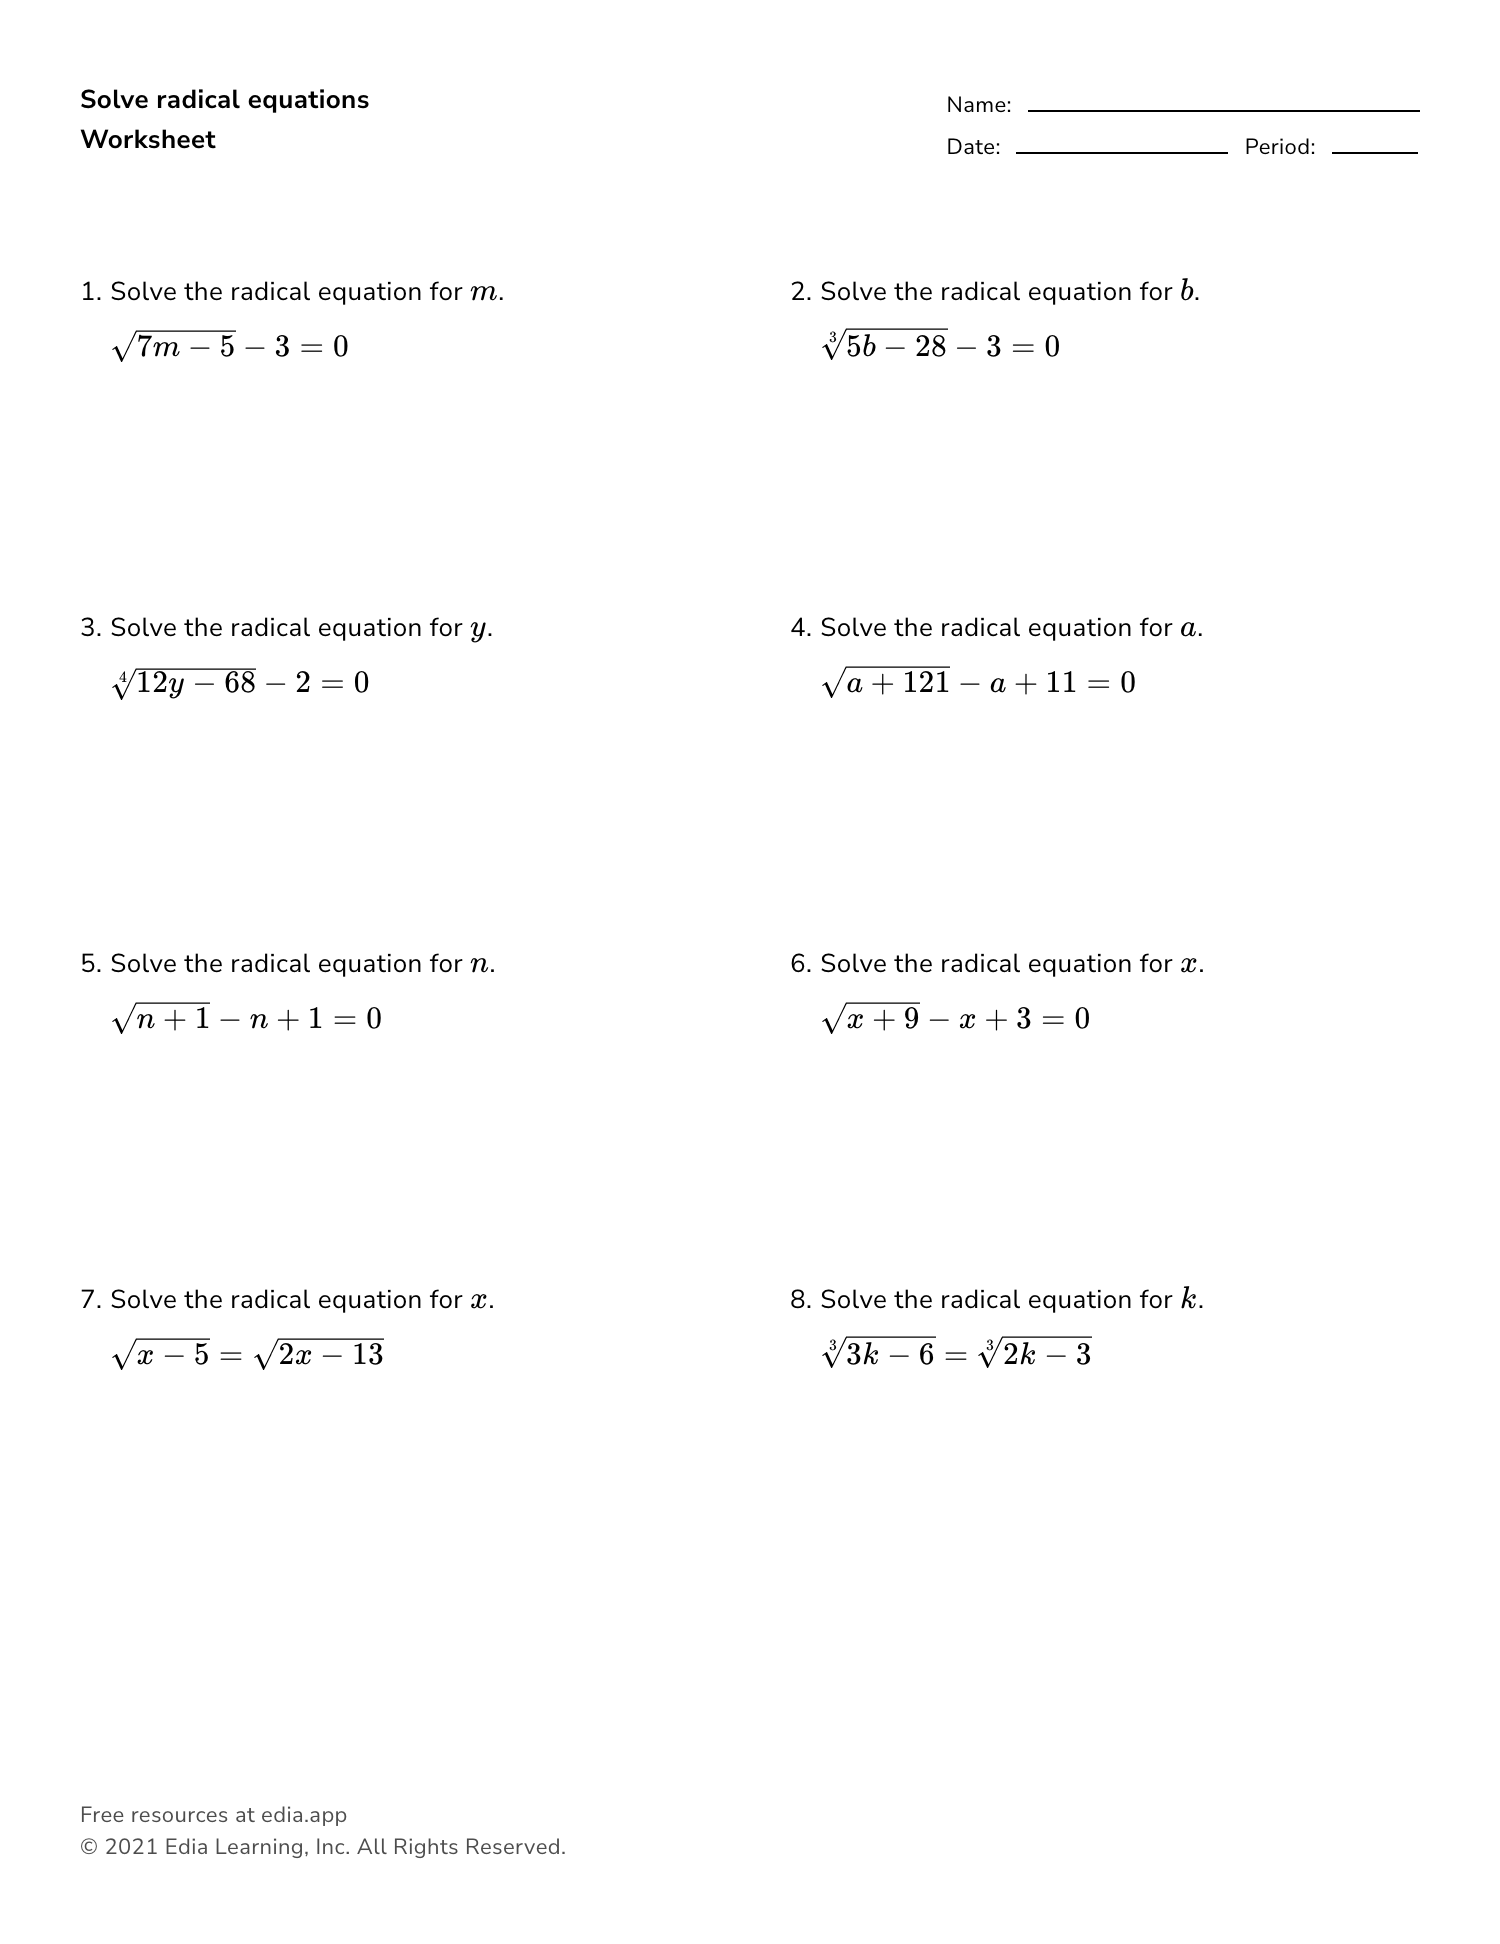 Solve Radical Equations - Worksheet Within Solving Radical Equations Worksheet